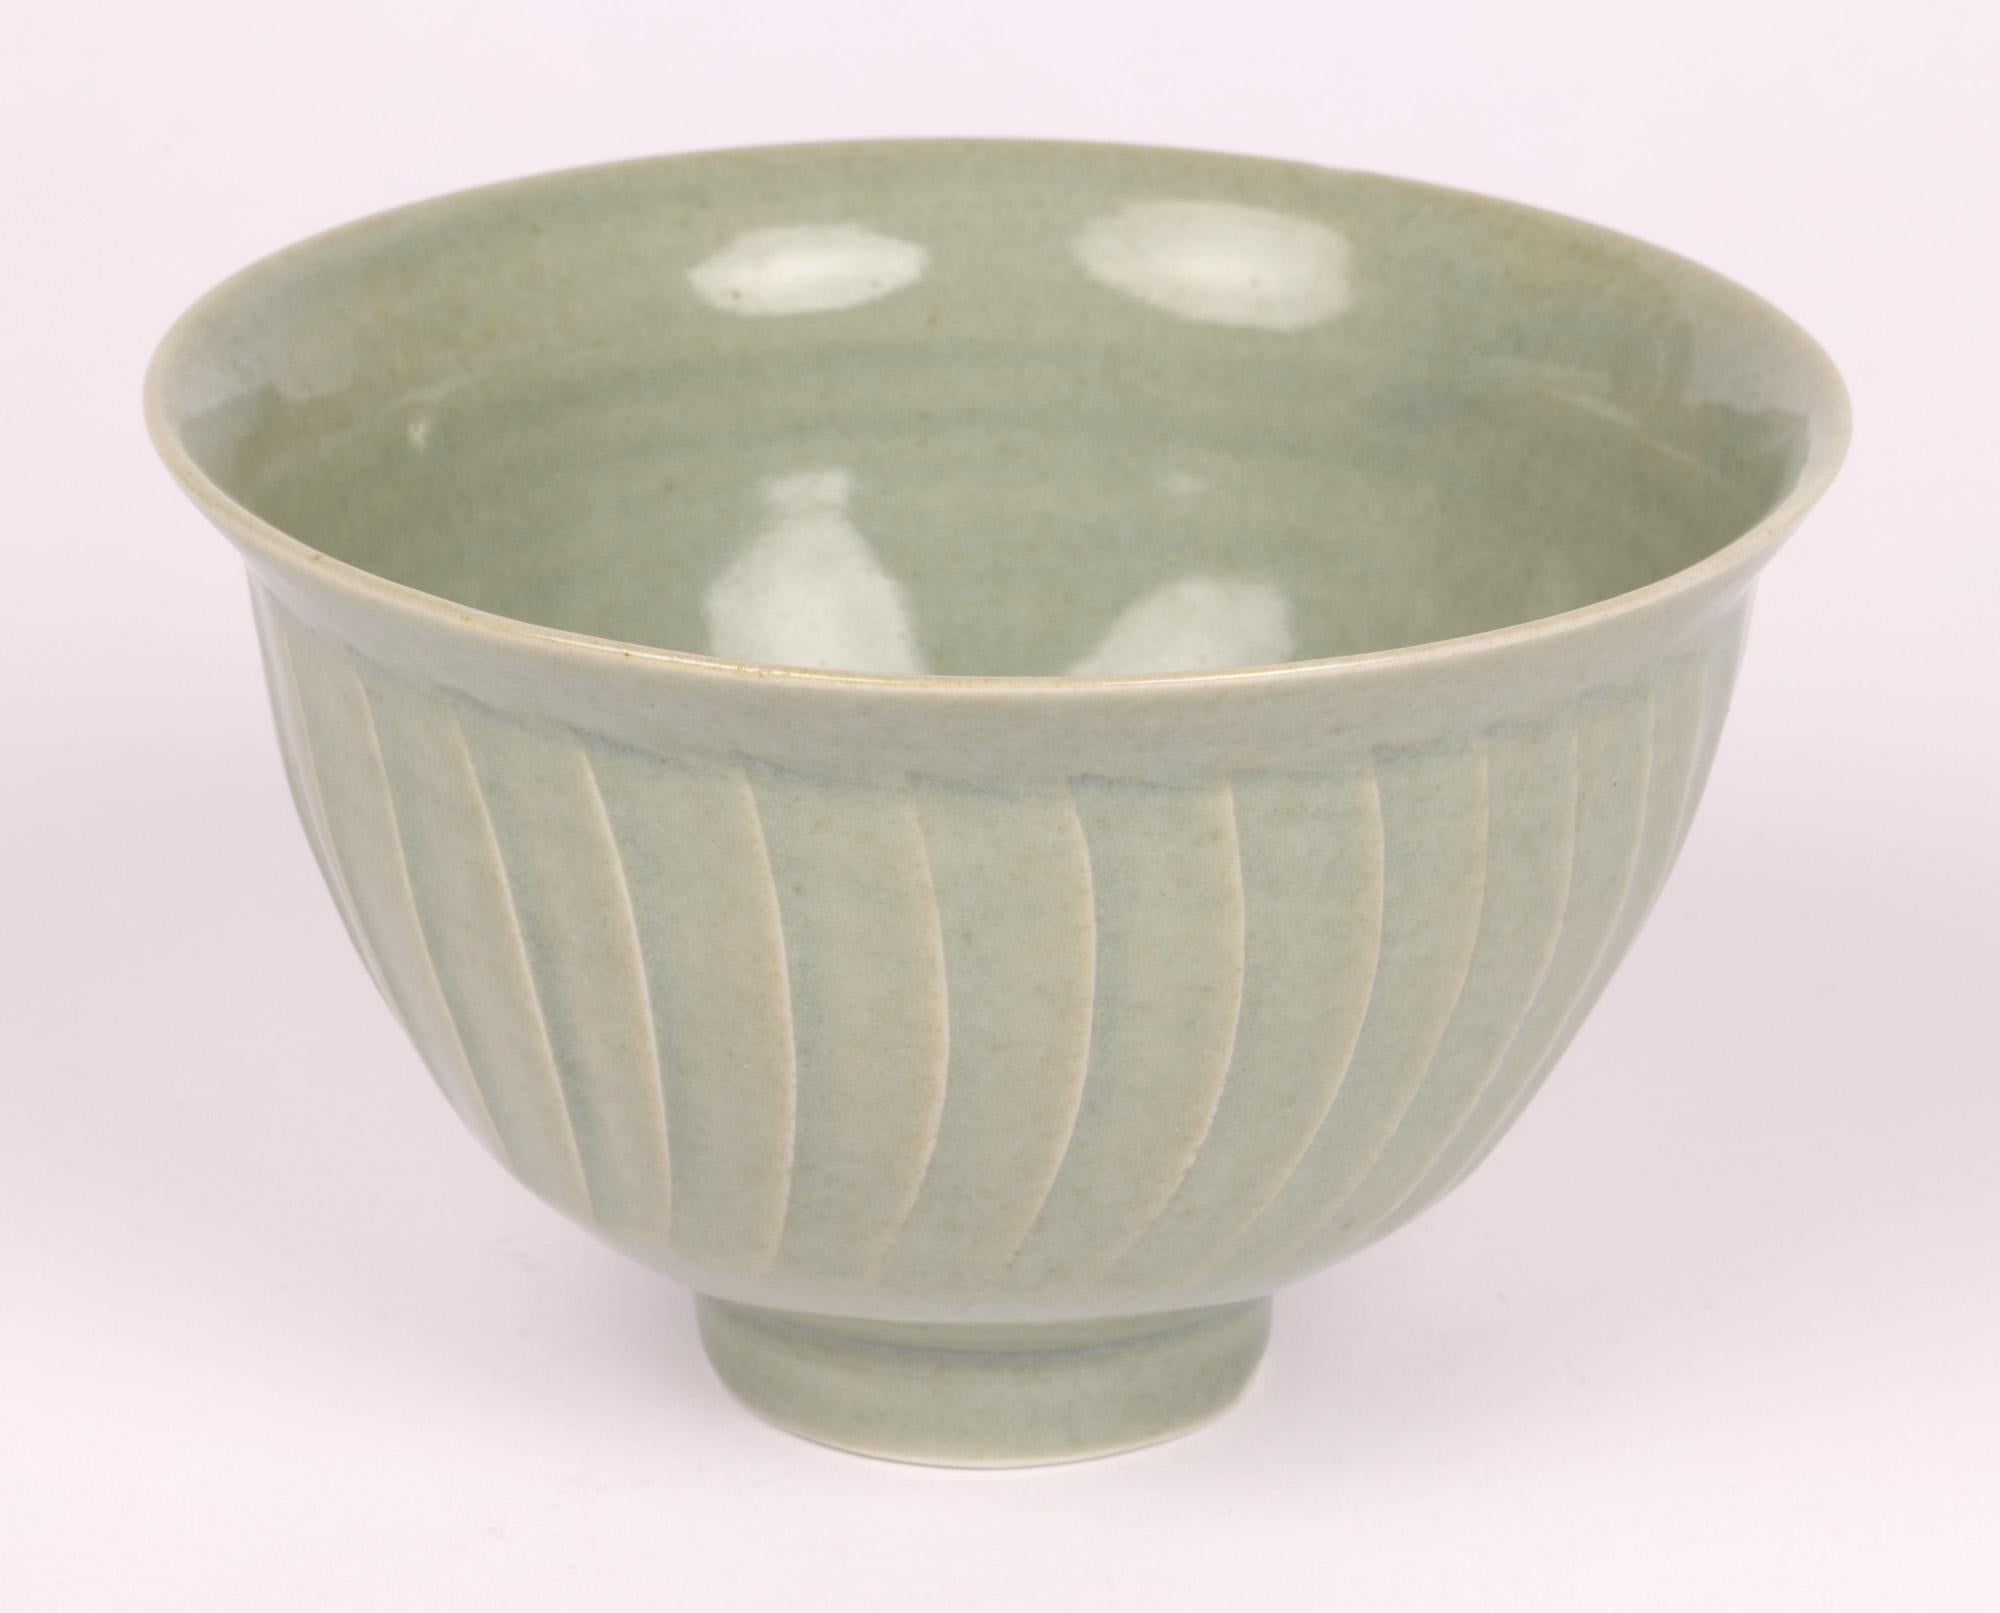 David Leach Lowerdown Studio Pottery Celadon Glazed Bowl For Sale 3